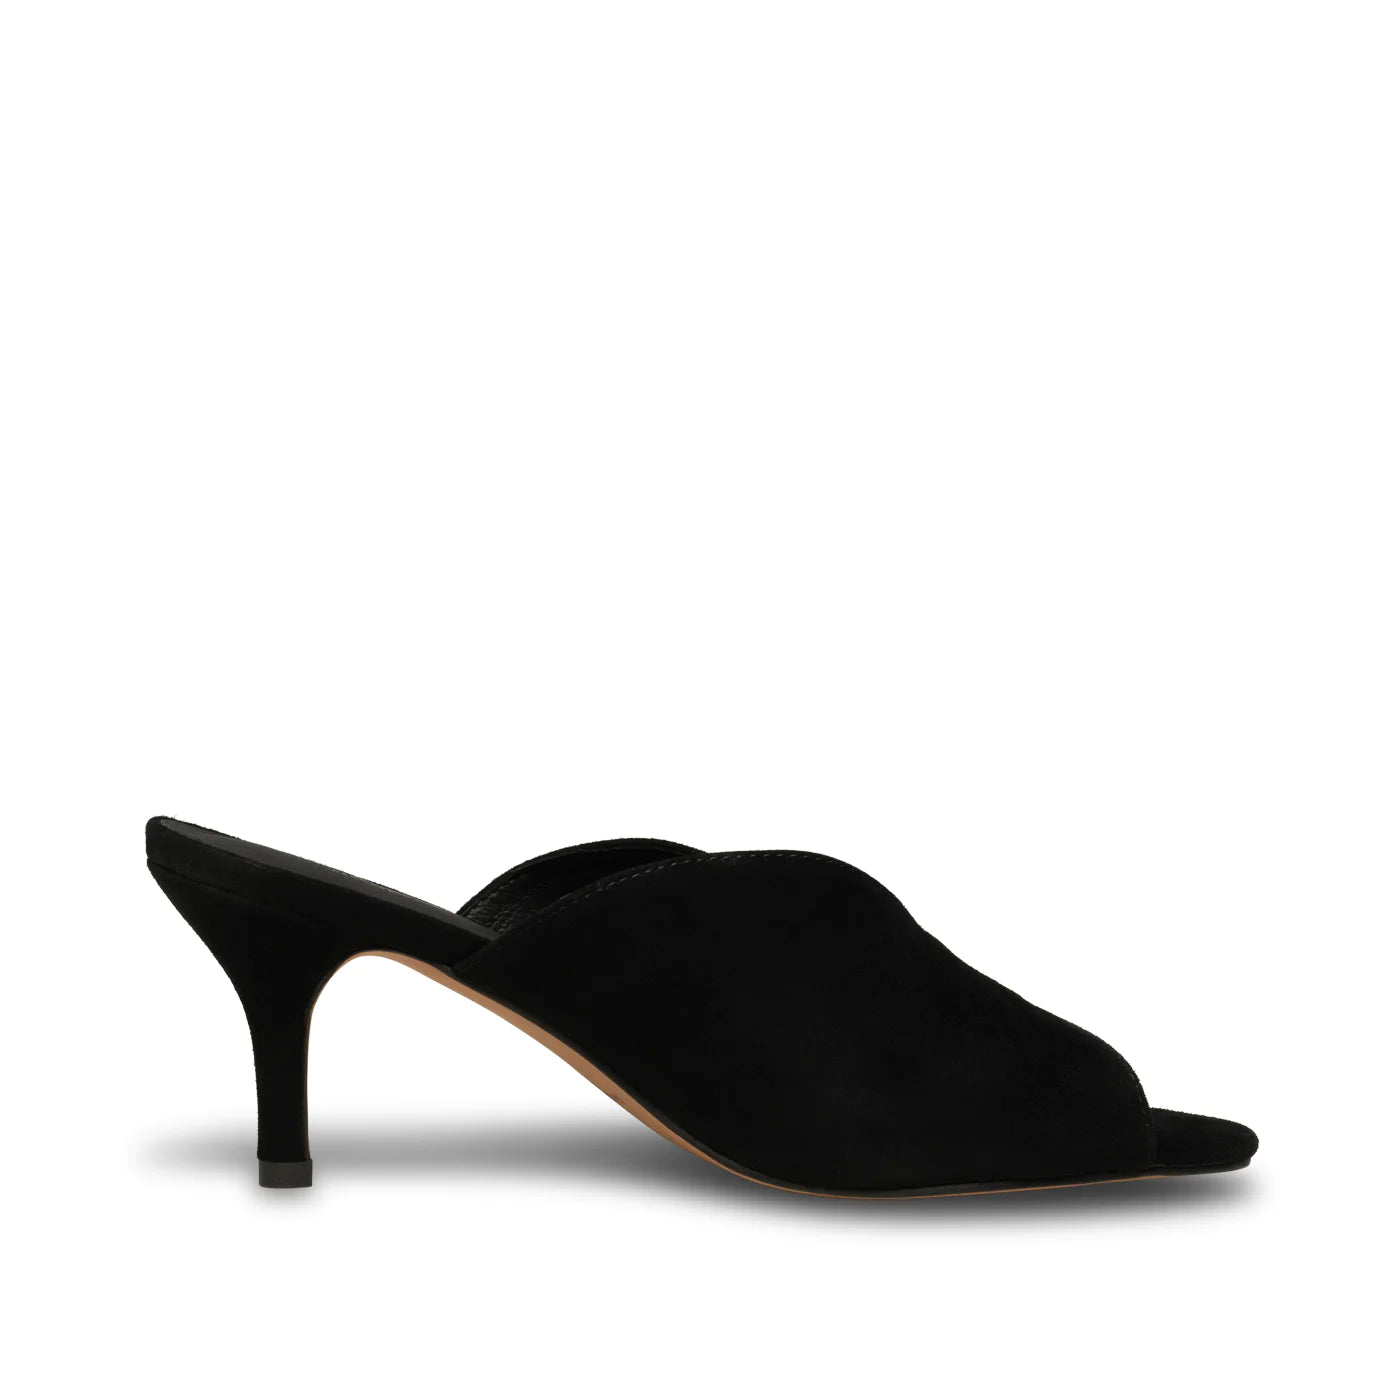 Shoe The Bear Valentine Suede Sandal - Black